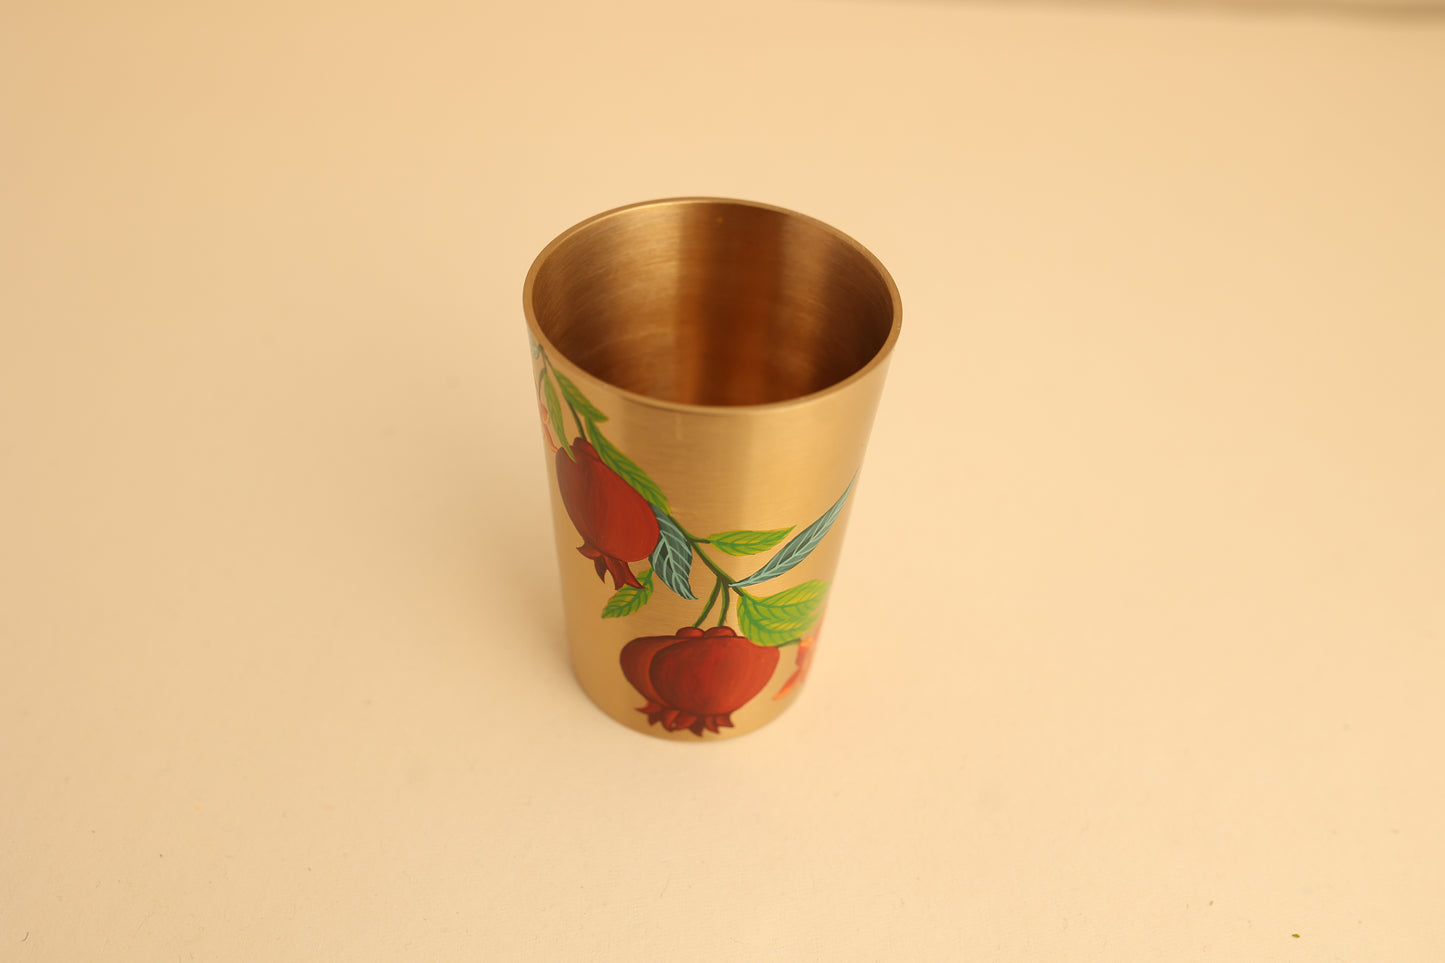 Anar Bronze Glass - Set Of 2